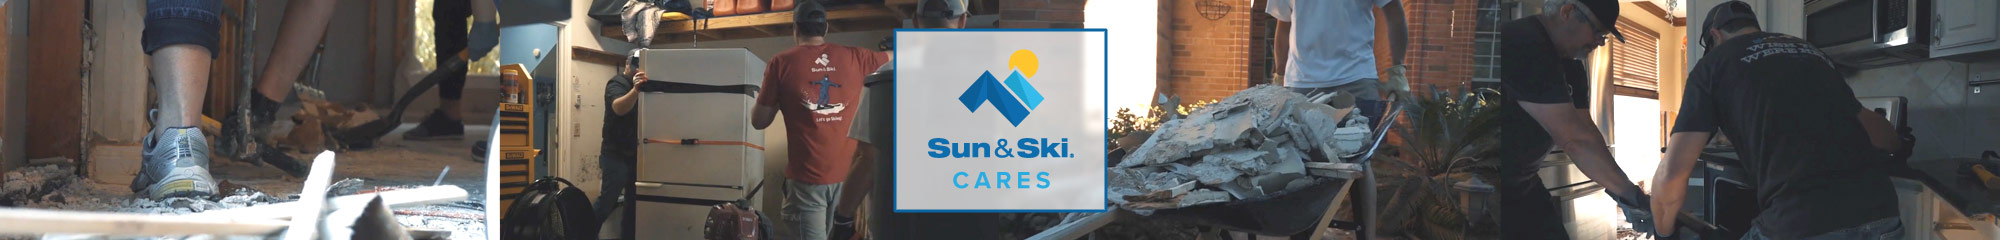 Sun and Ski Cares